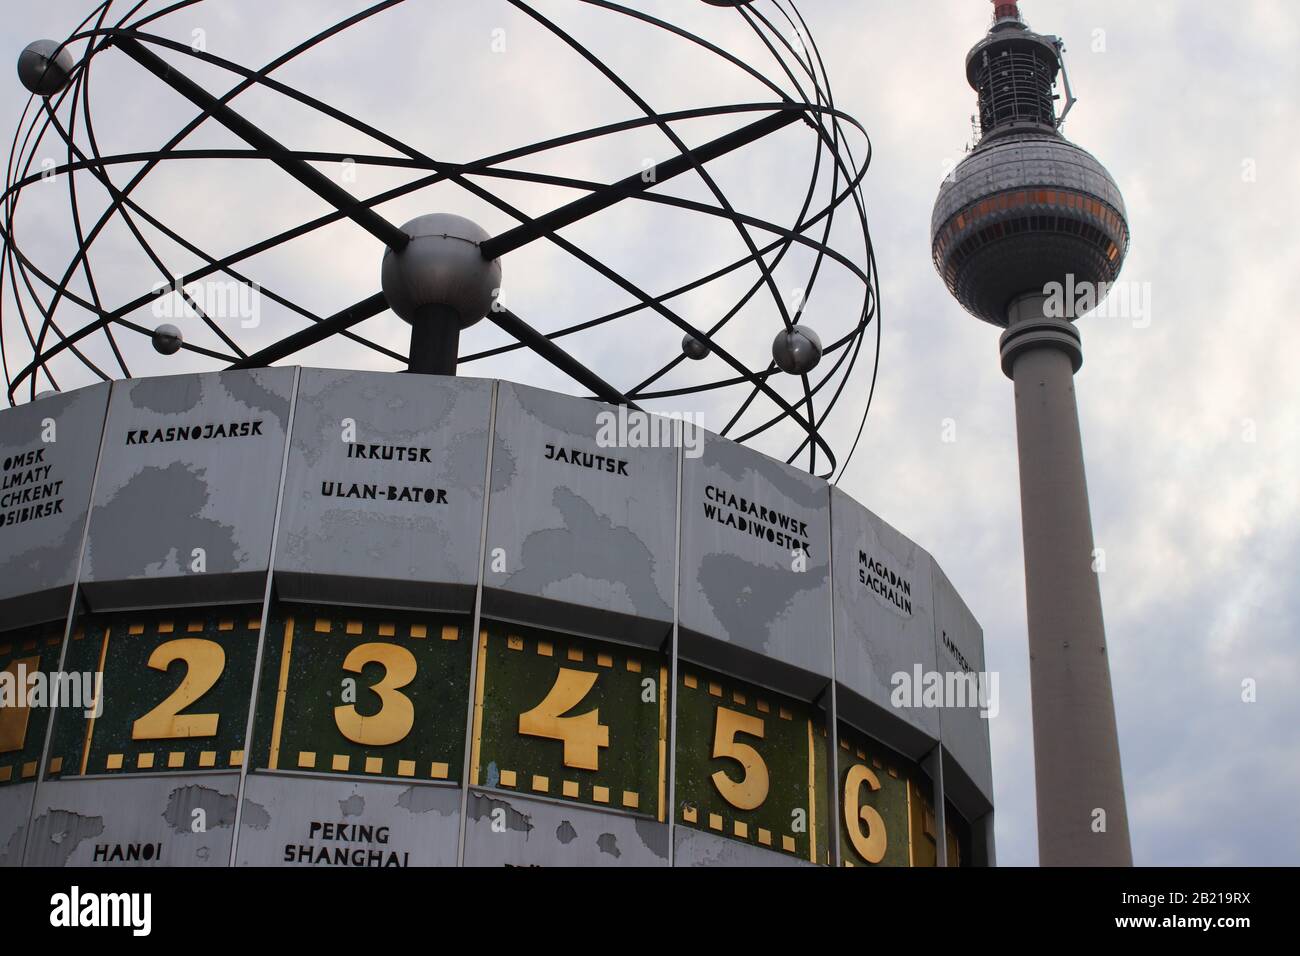 World clock and tv tower Berlin Alexanderplatz Stock Photo